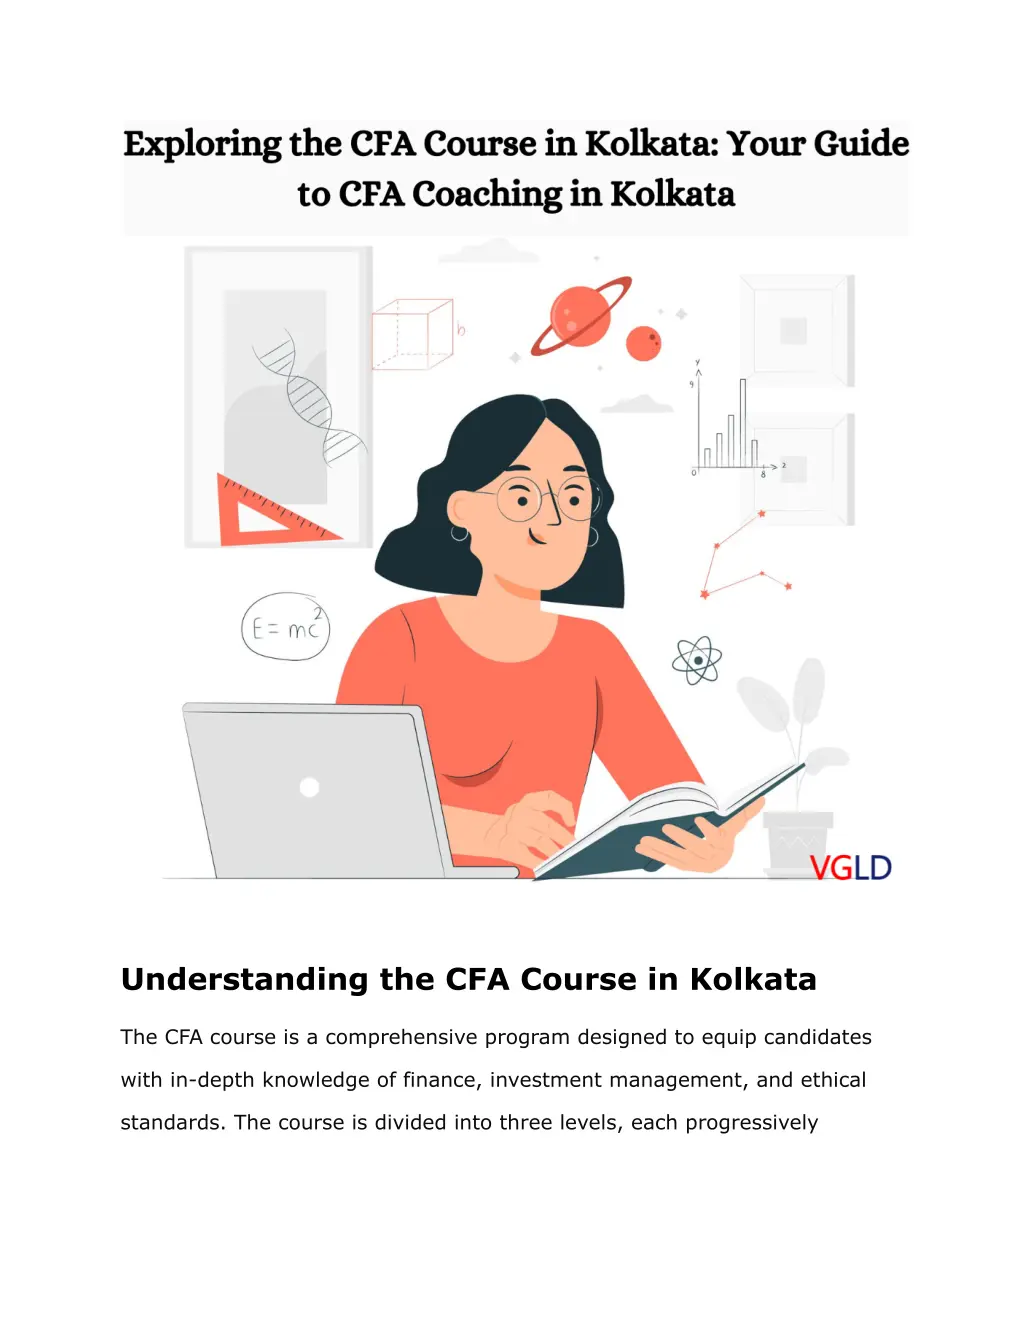 understanding the cfa course in kolkata